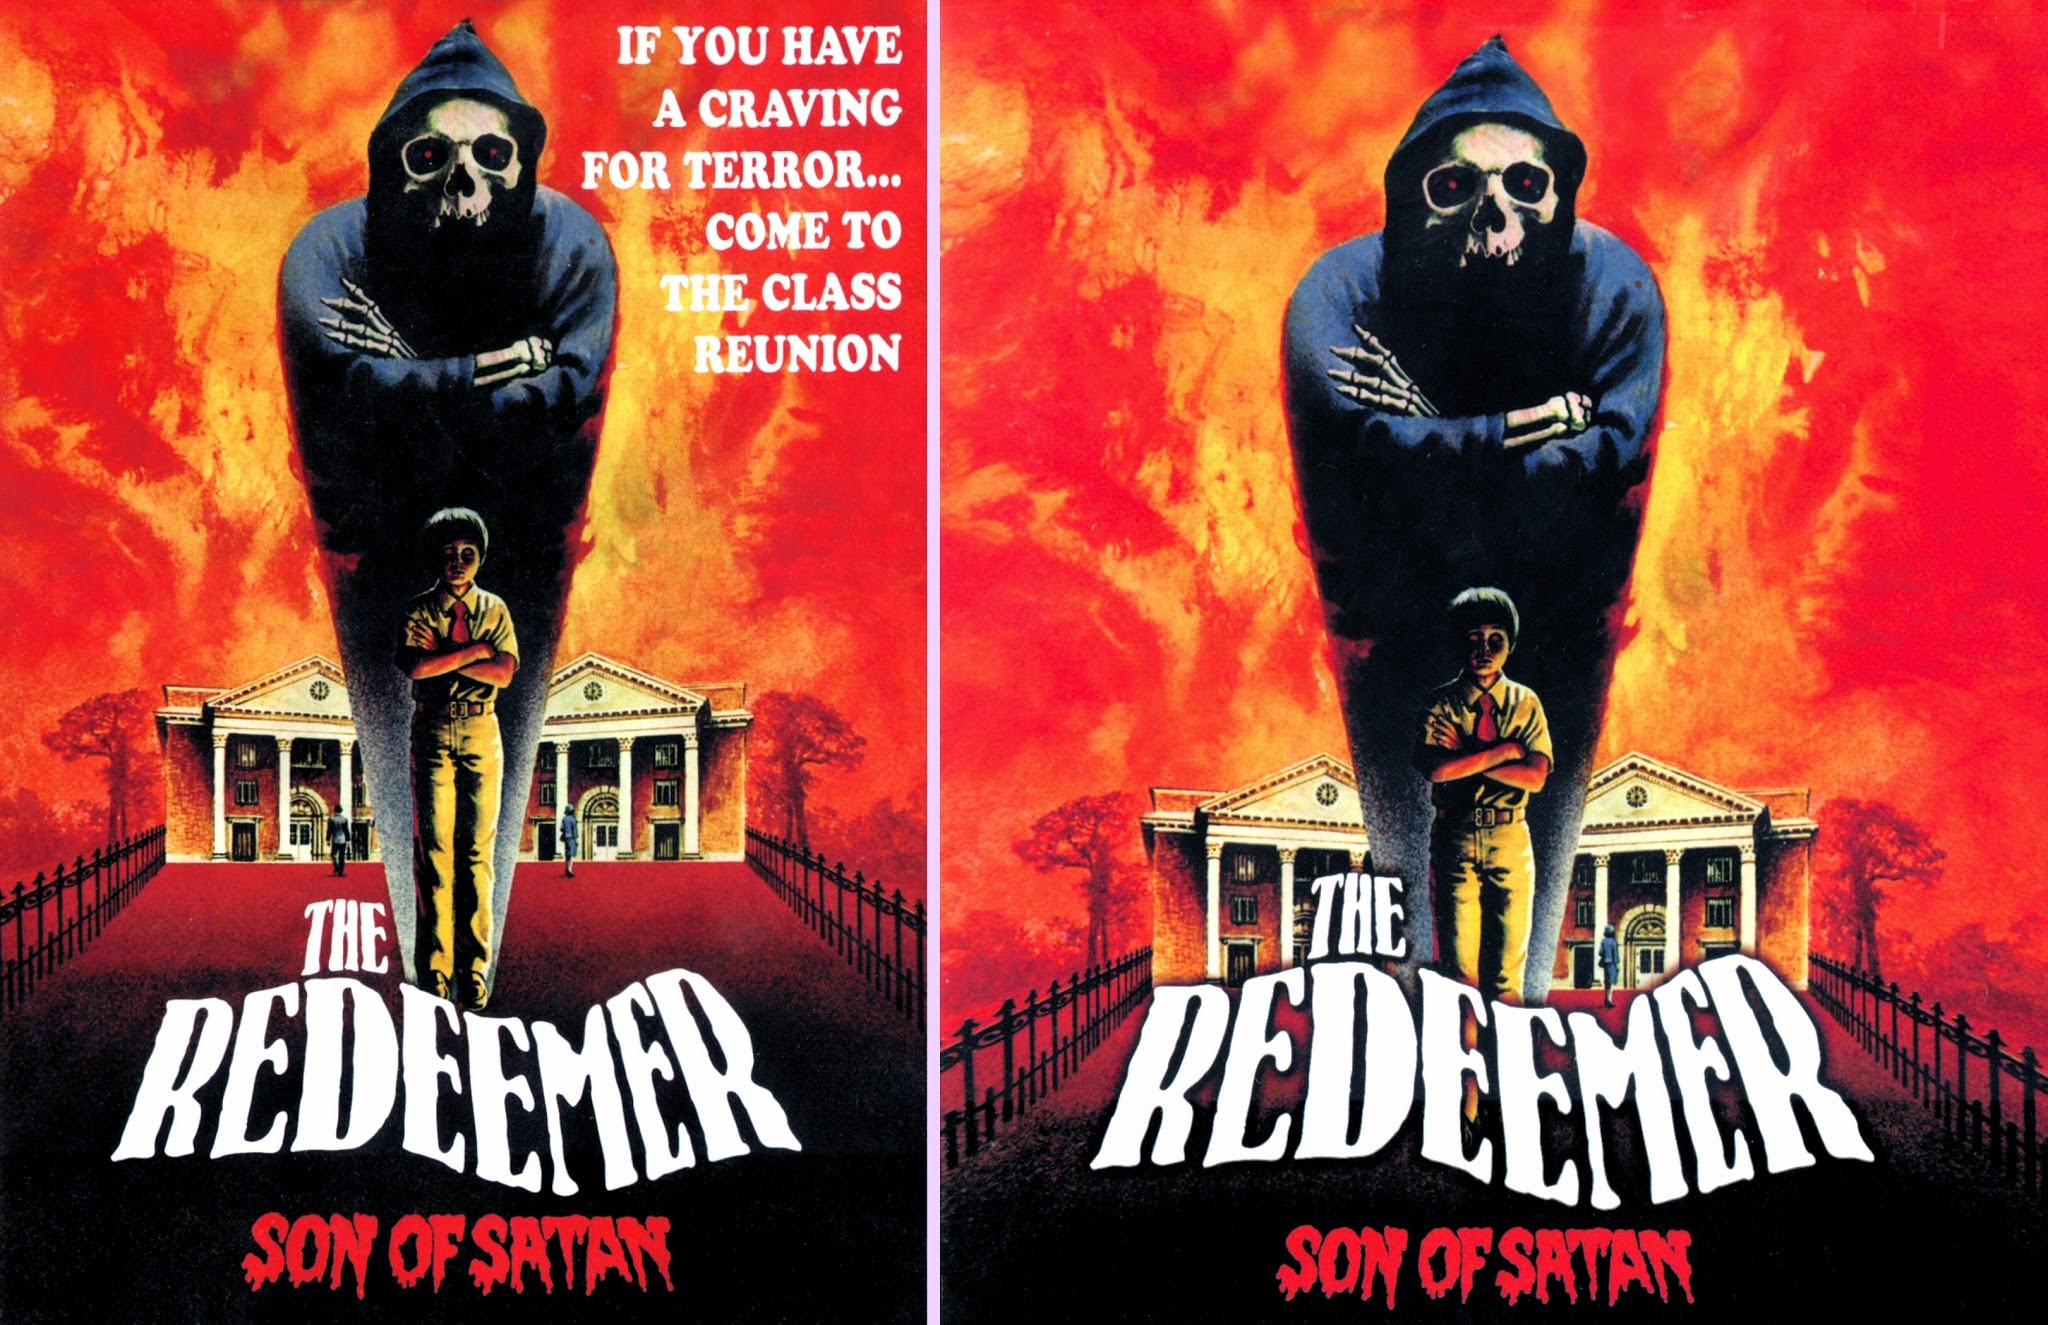 DVD Exotica Code Reds the Redeemer Vs Code Reds the Redeemer (DVD/ Blu-ray Comparison)